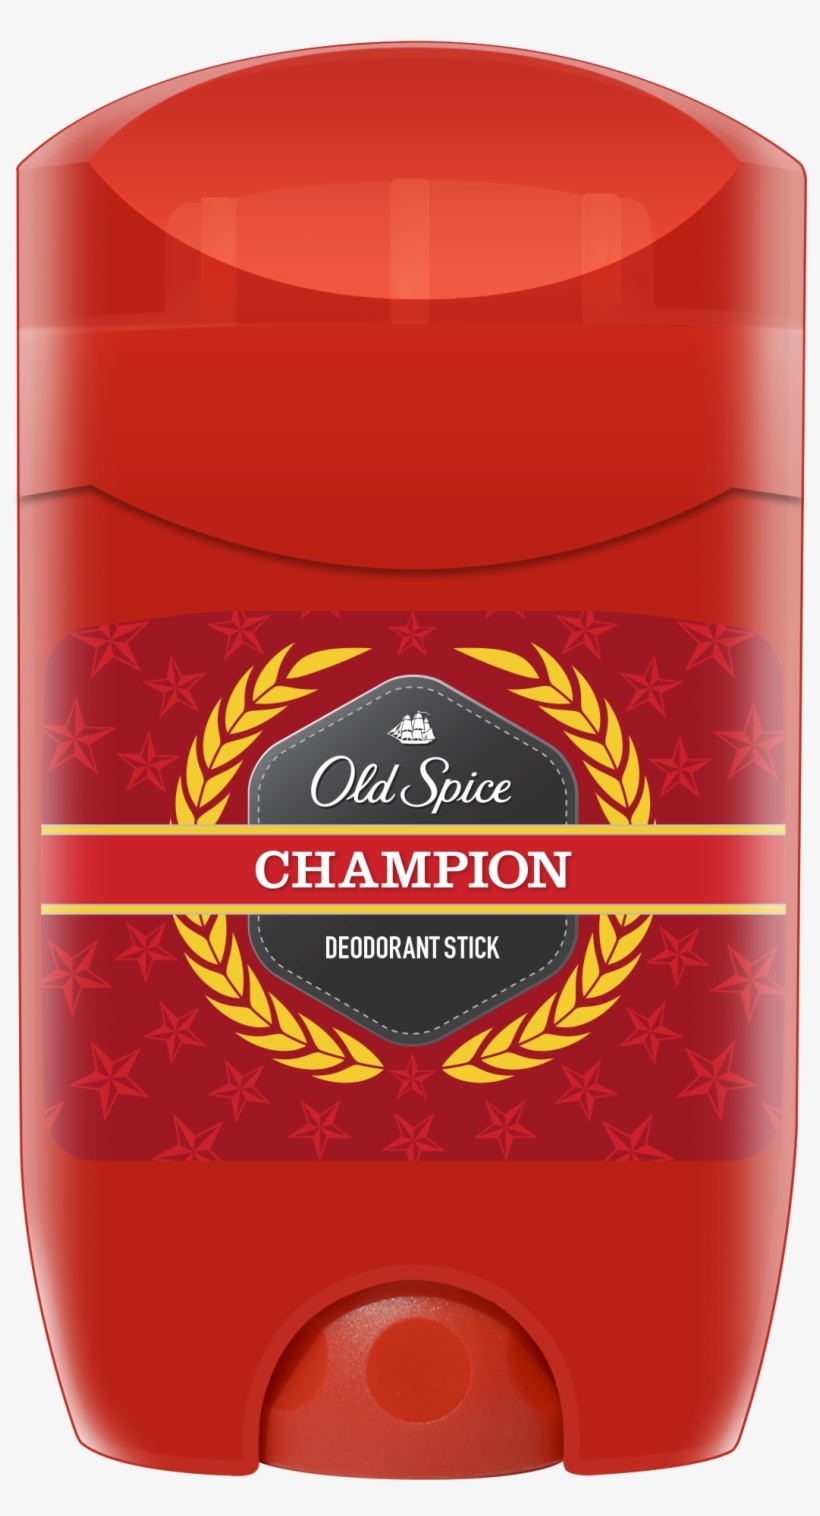 Deodorant Stick Old Spice Champion, 50 Ml - Old Spice Champion Deodorant Stick, transparent png #7820432